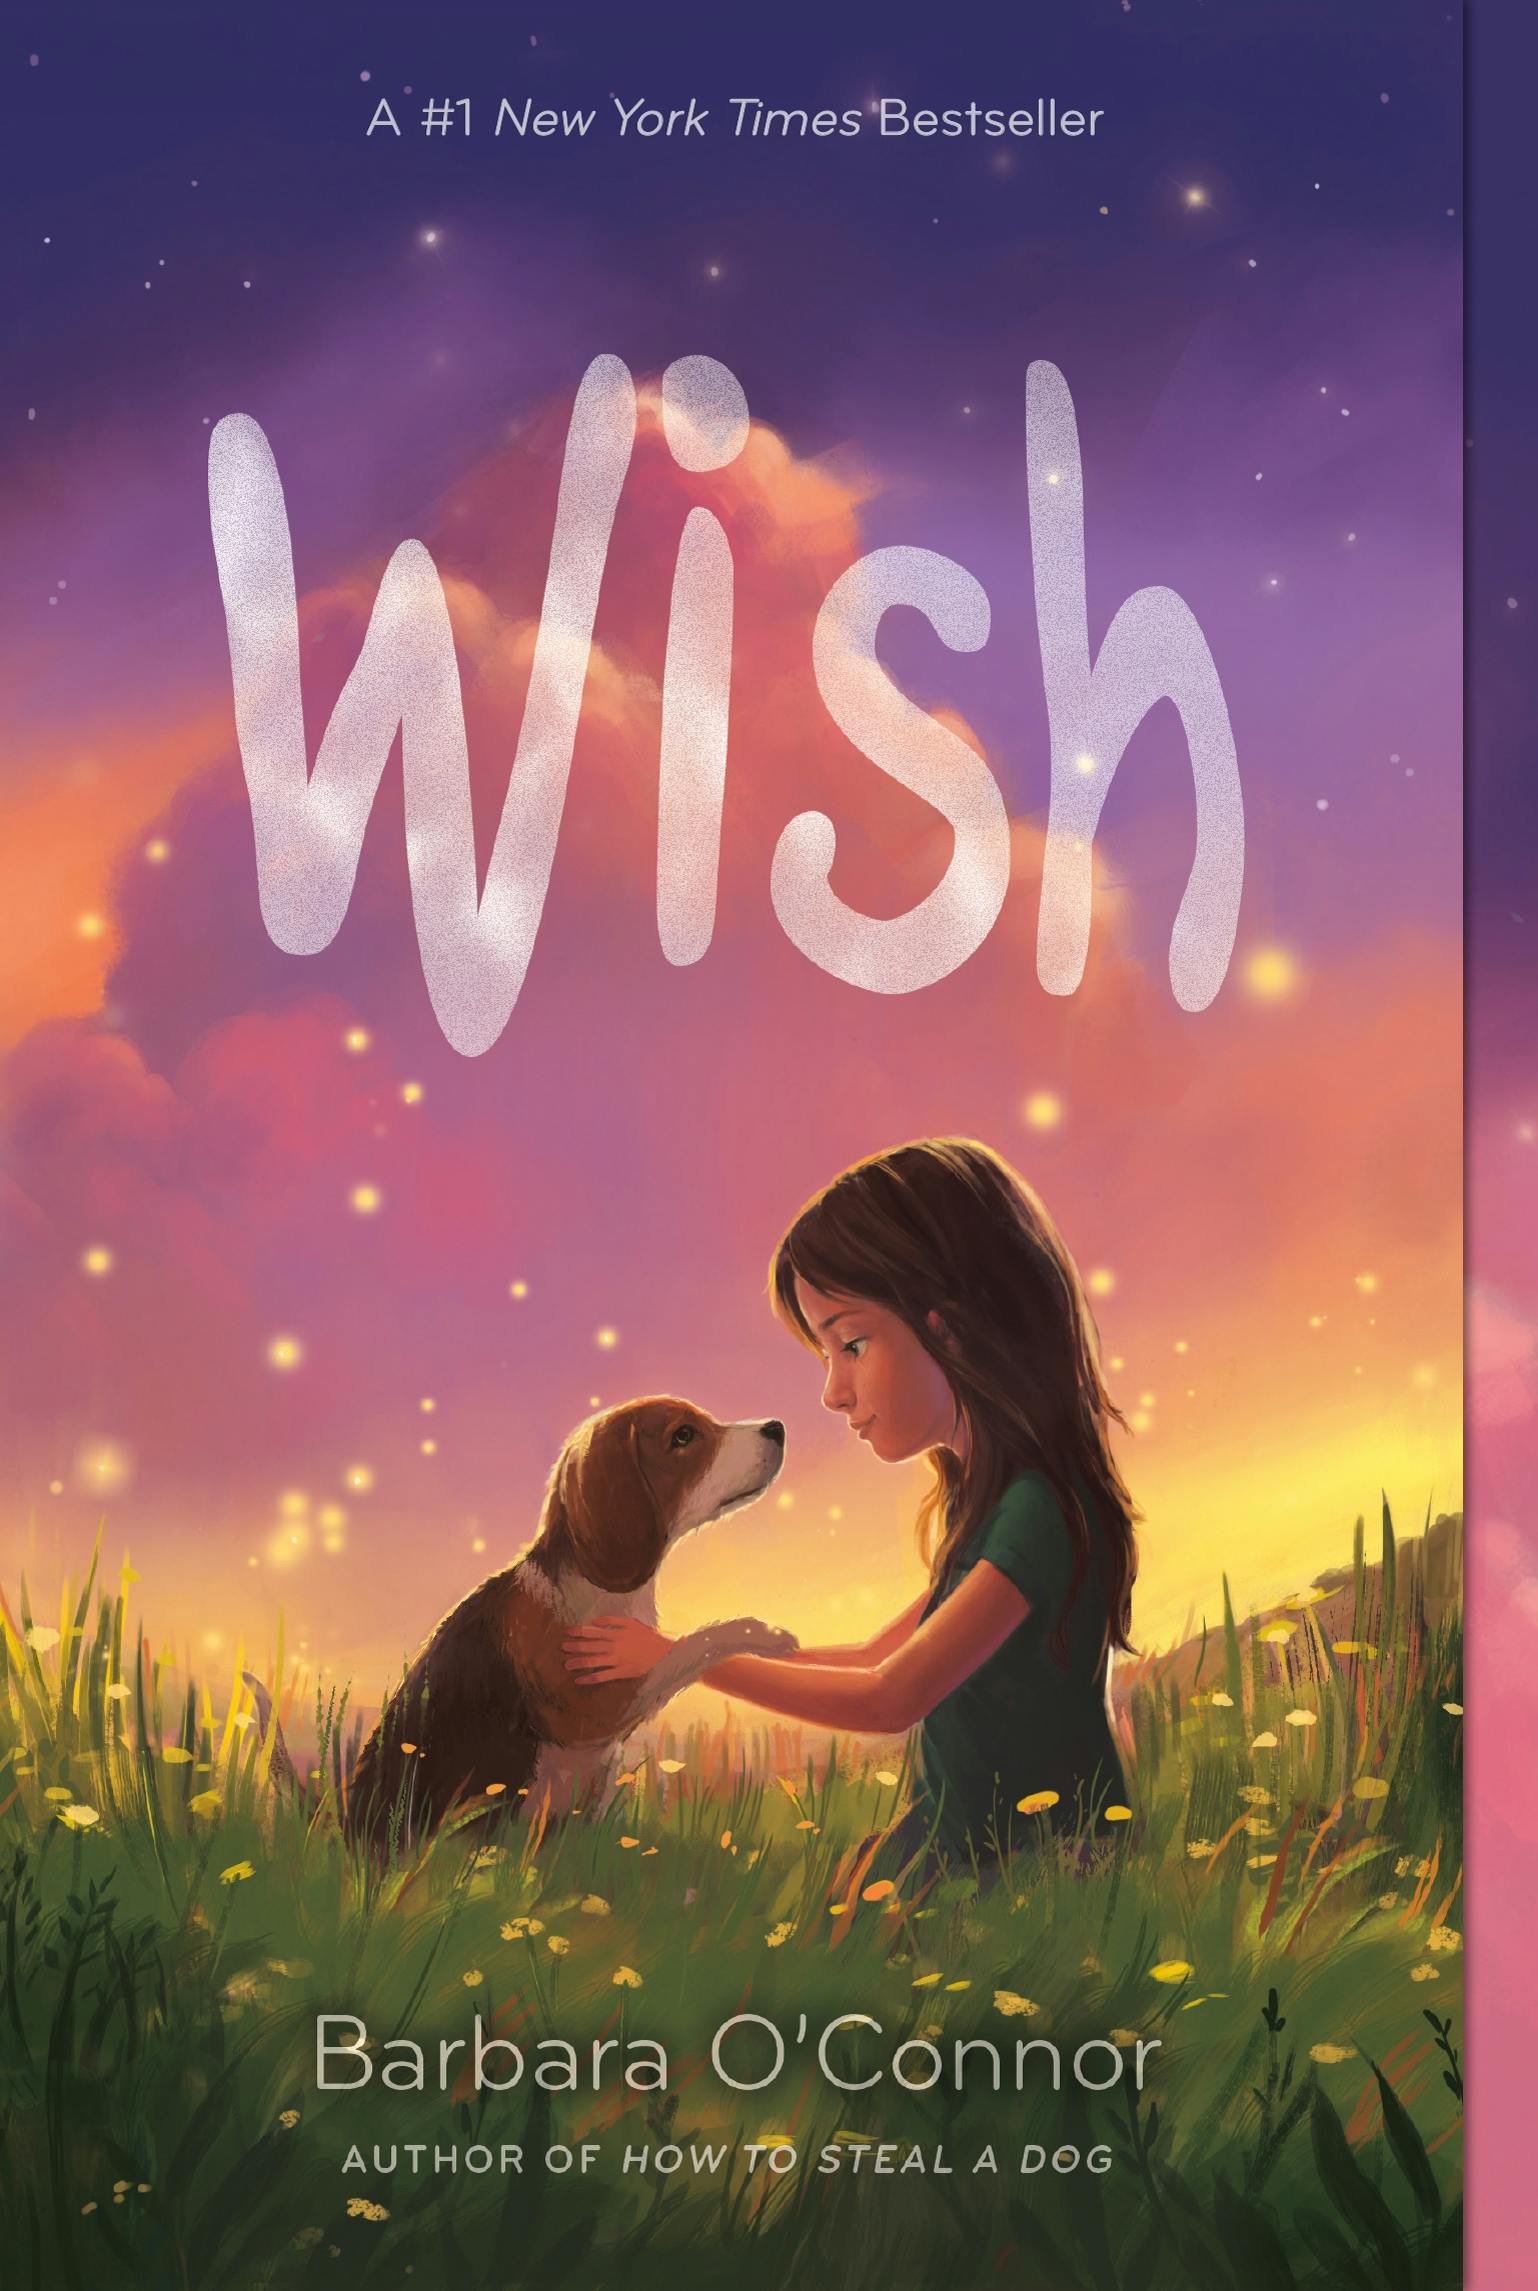 Wishes, Secrets, and Dreams Pencil Set